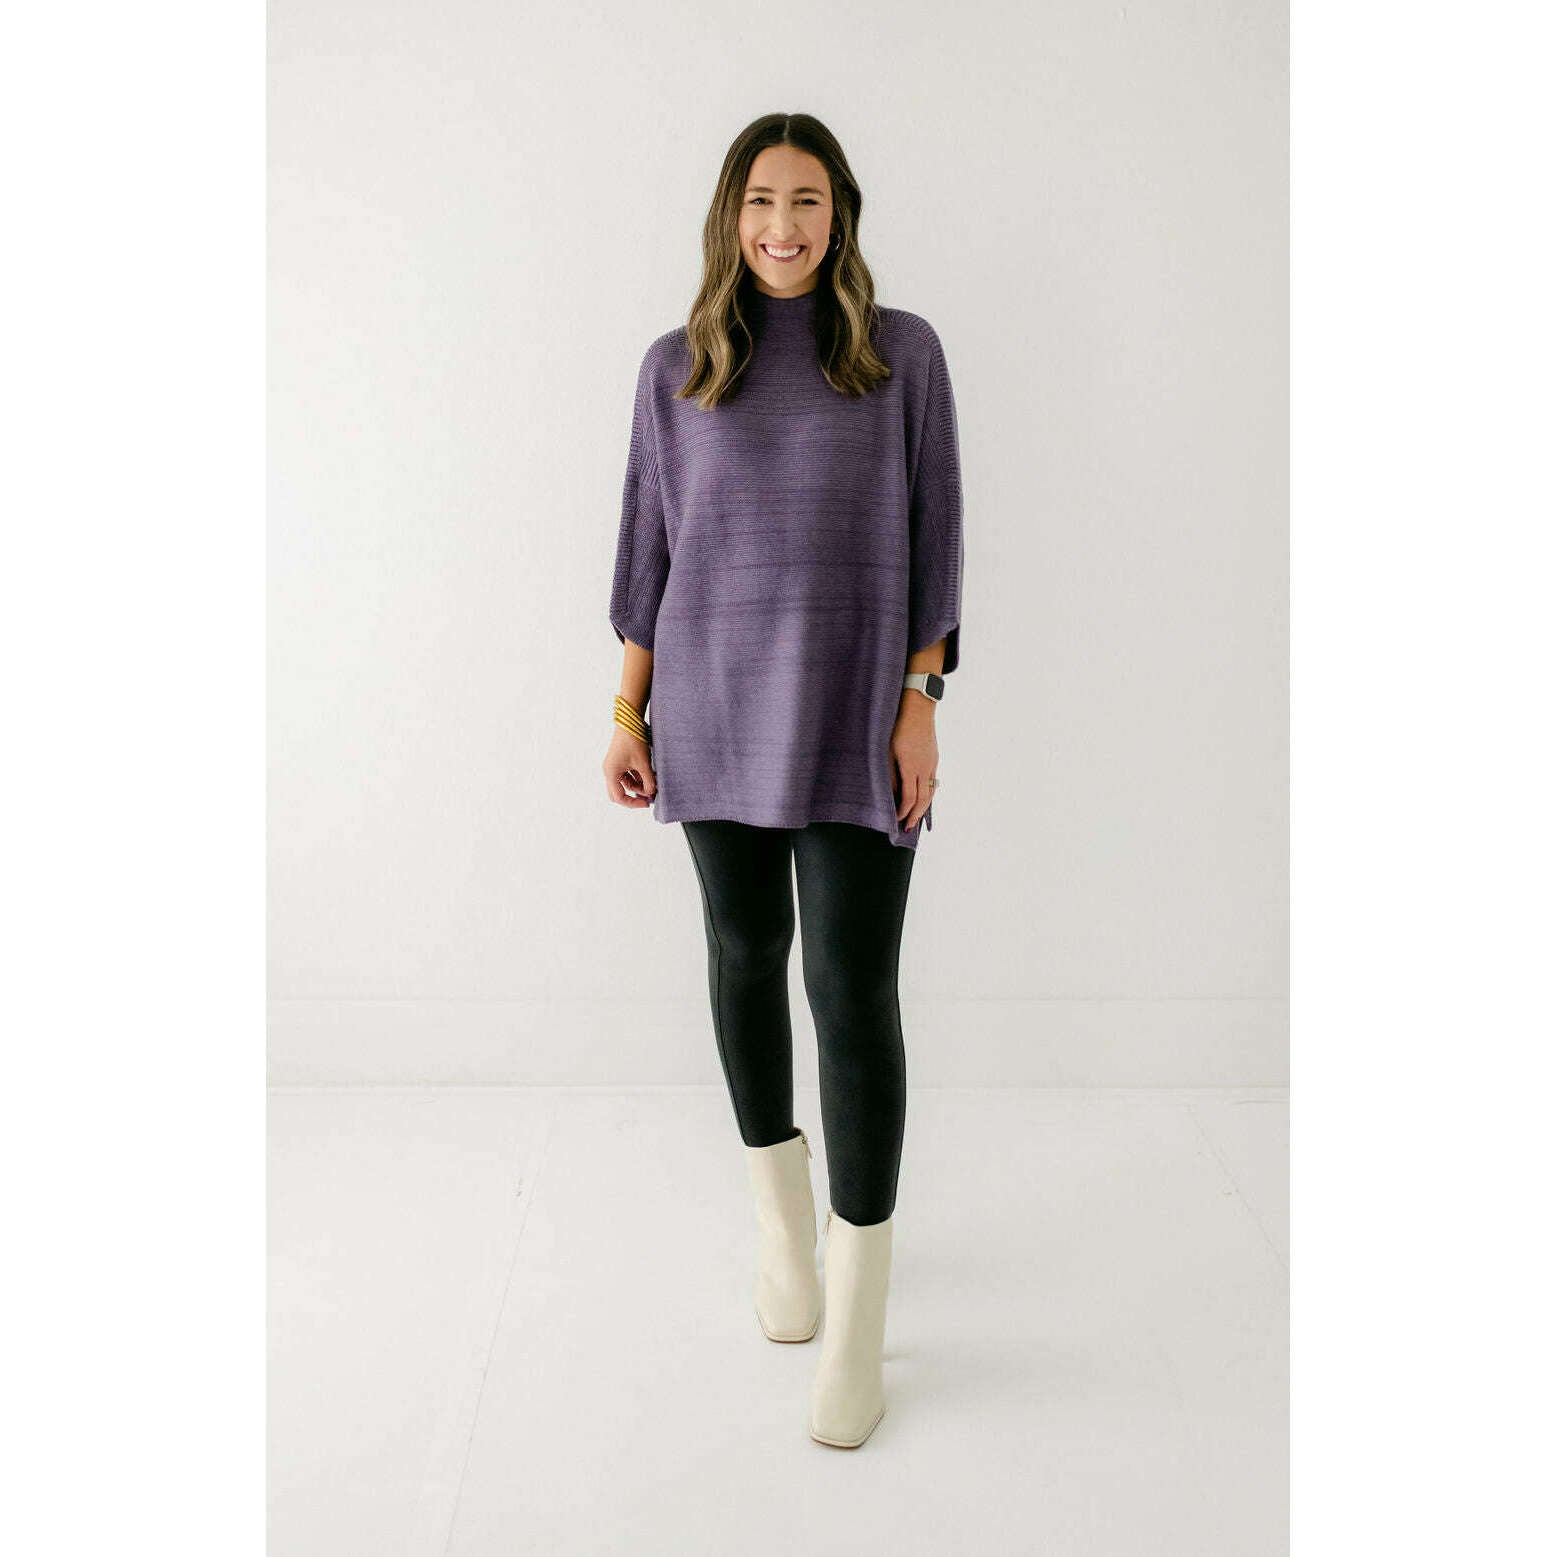 8.28 Boutique:Kerisma Knits,Kerisma Knits Boho Tunic in Vintage Violet,Sweaters